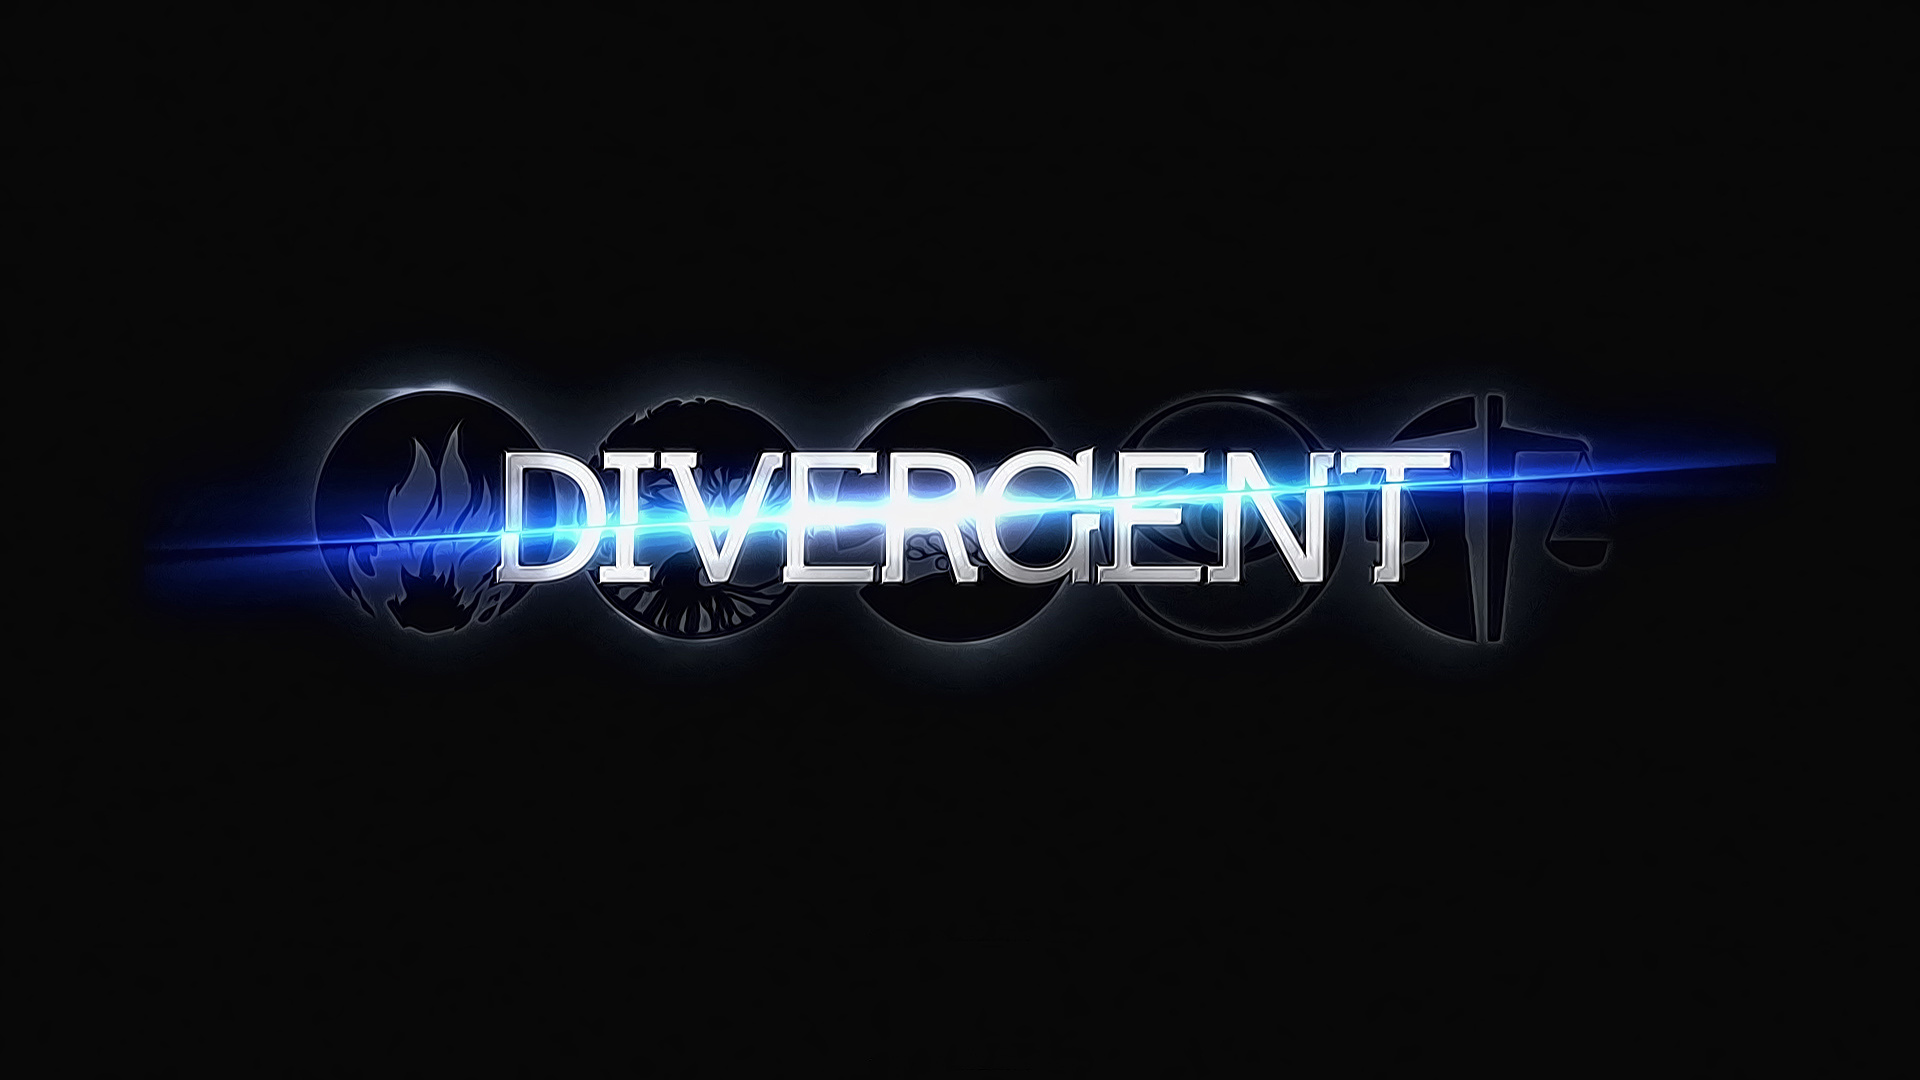 Divergent logos, Emblem symbols, Faction insignia, Iconic faction imagery, 1920x1080 Full HD Desktop